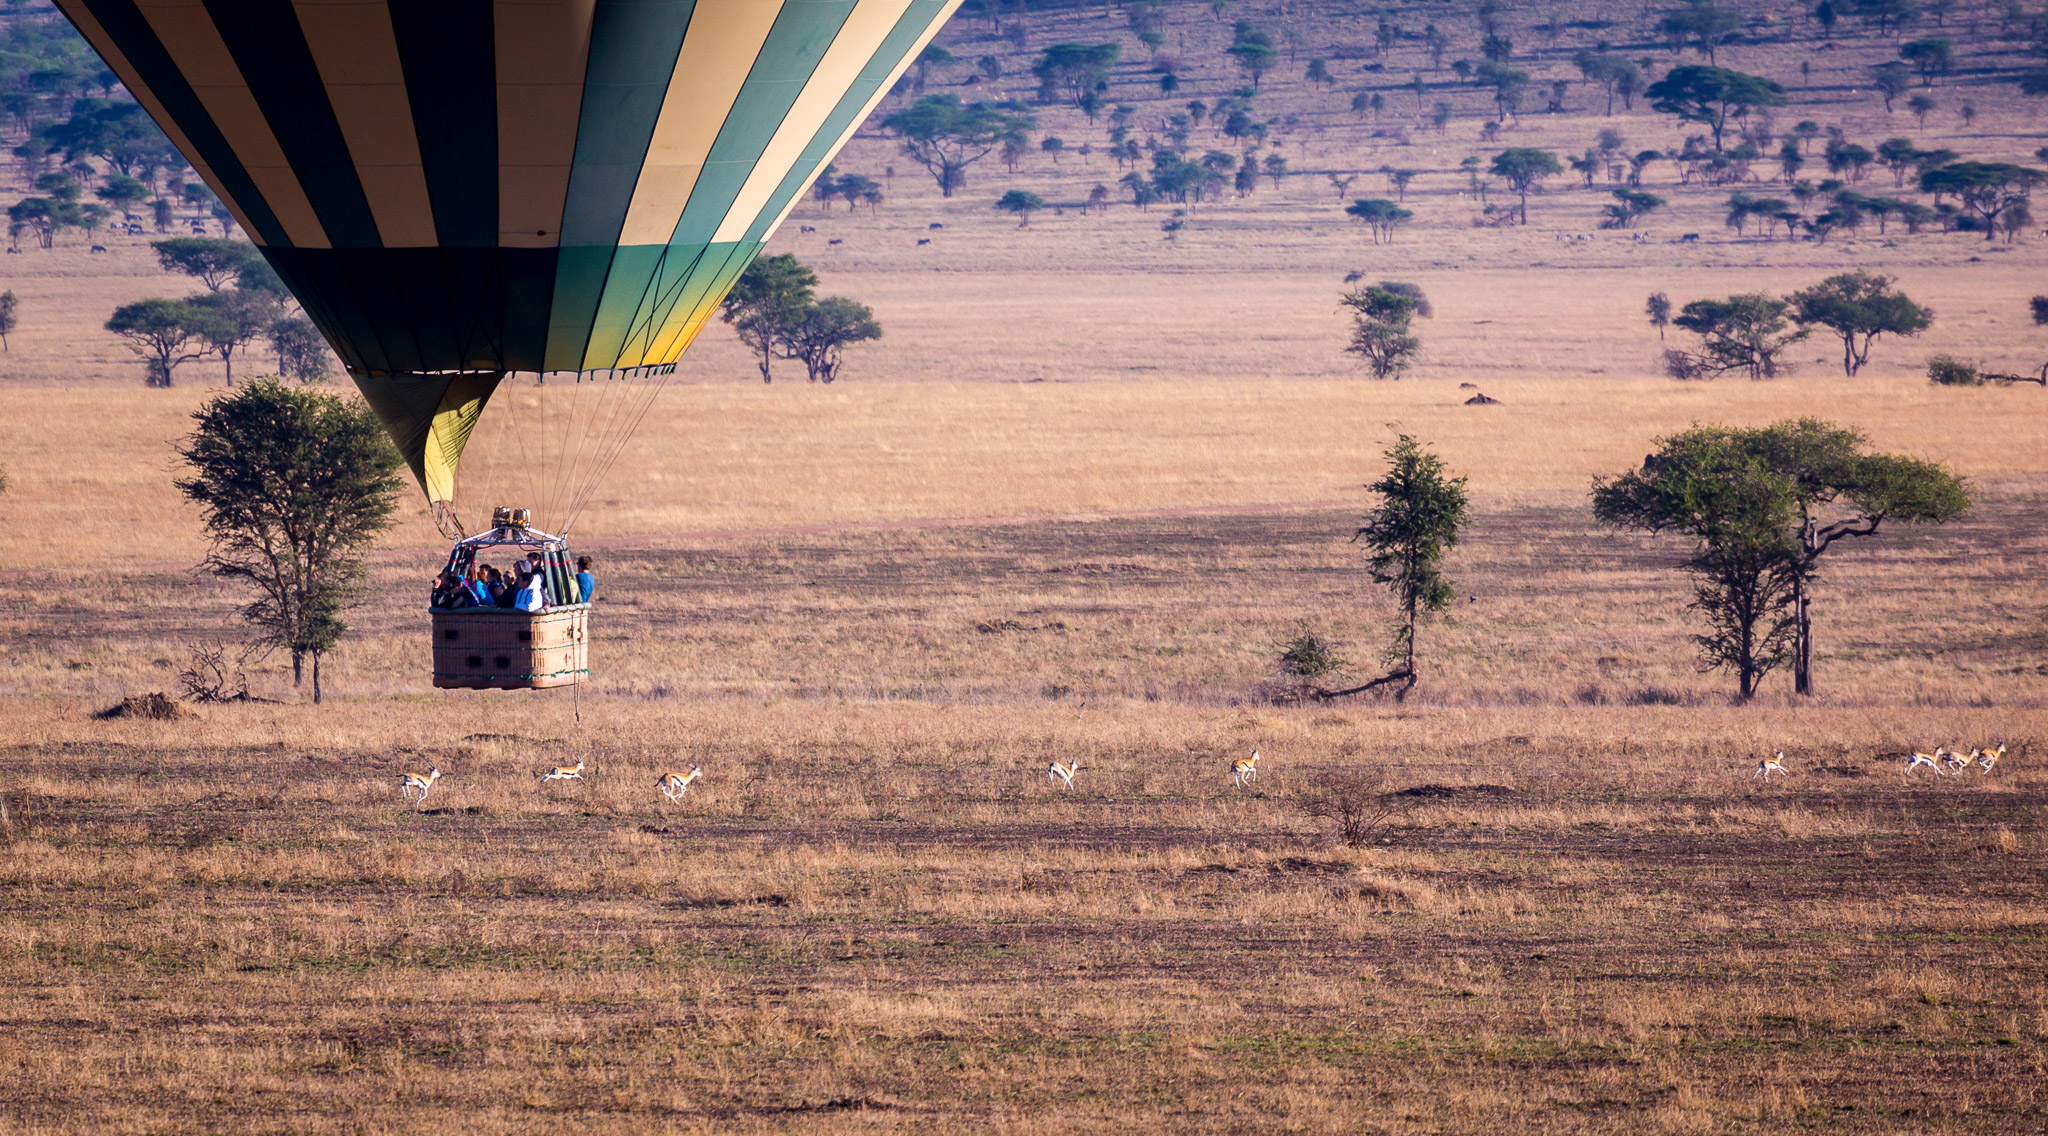 Hot Air Balloon over Serengeti